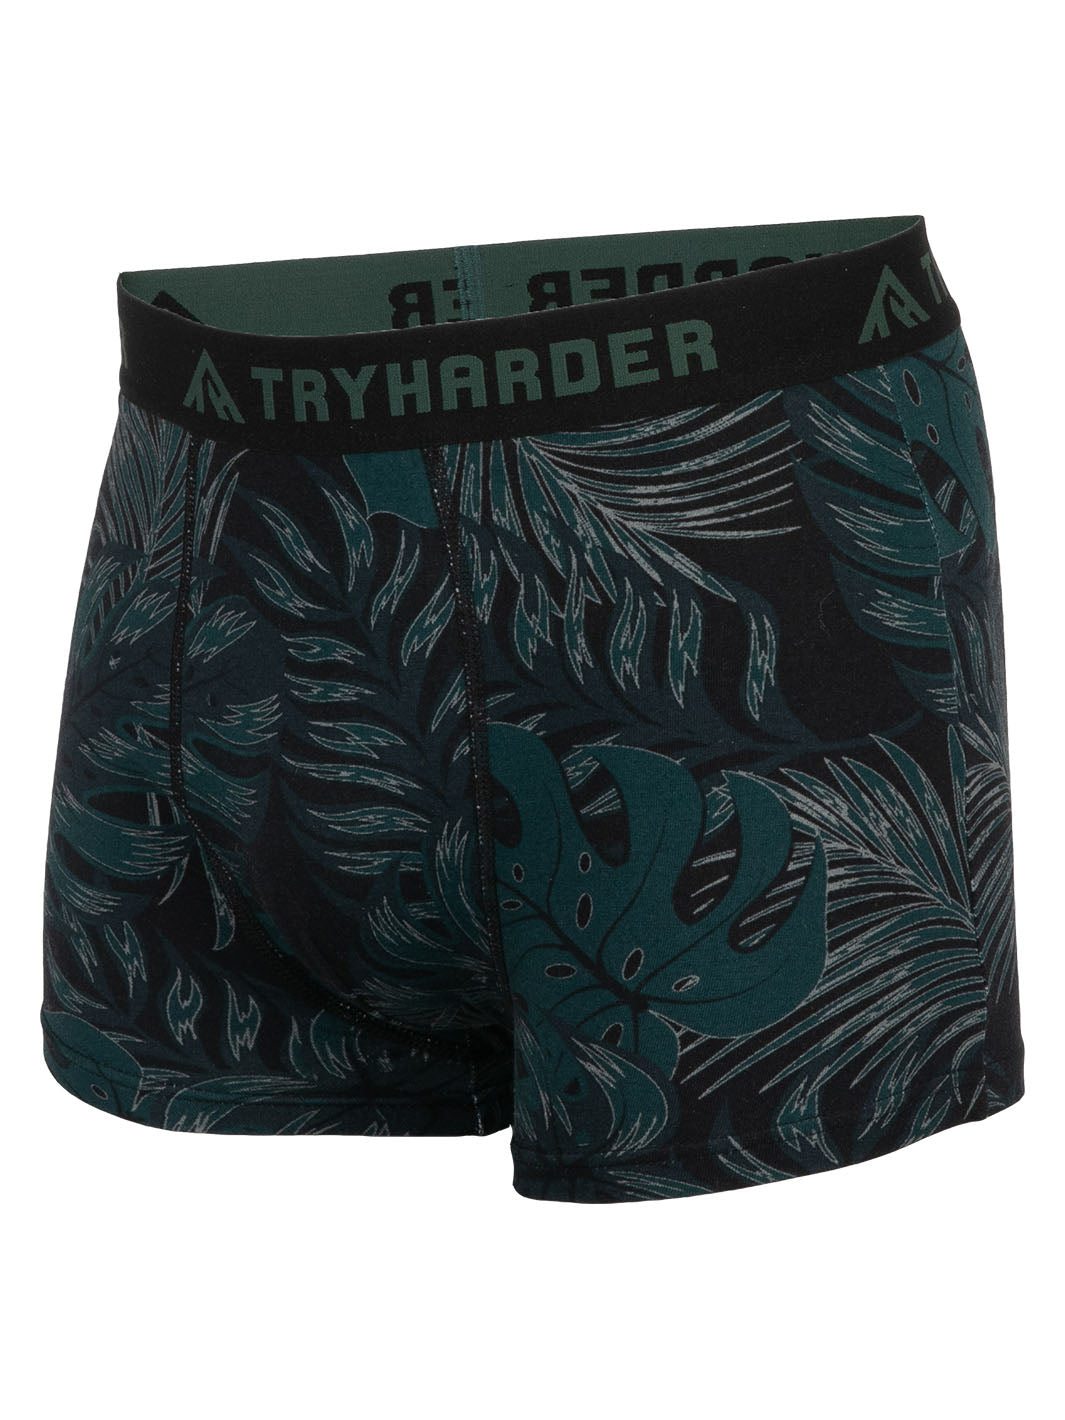 TRYHARDER - Boxer - Dunkelgrünes Laub 1 Pack